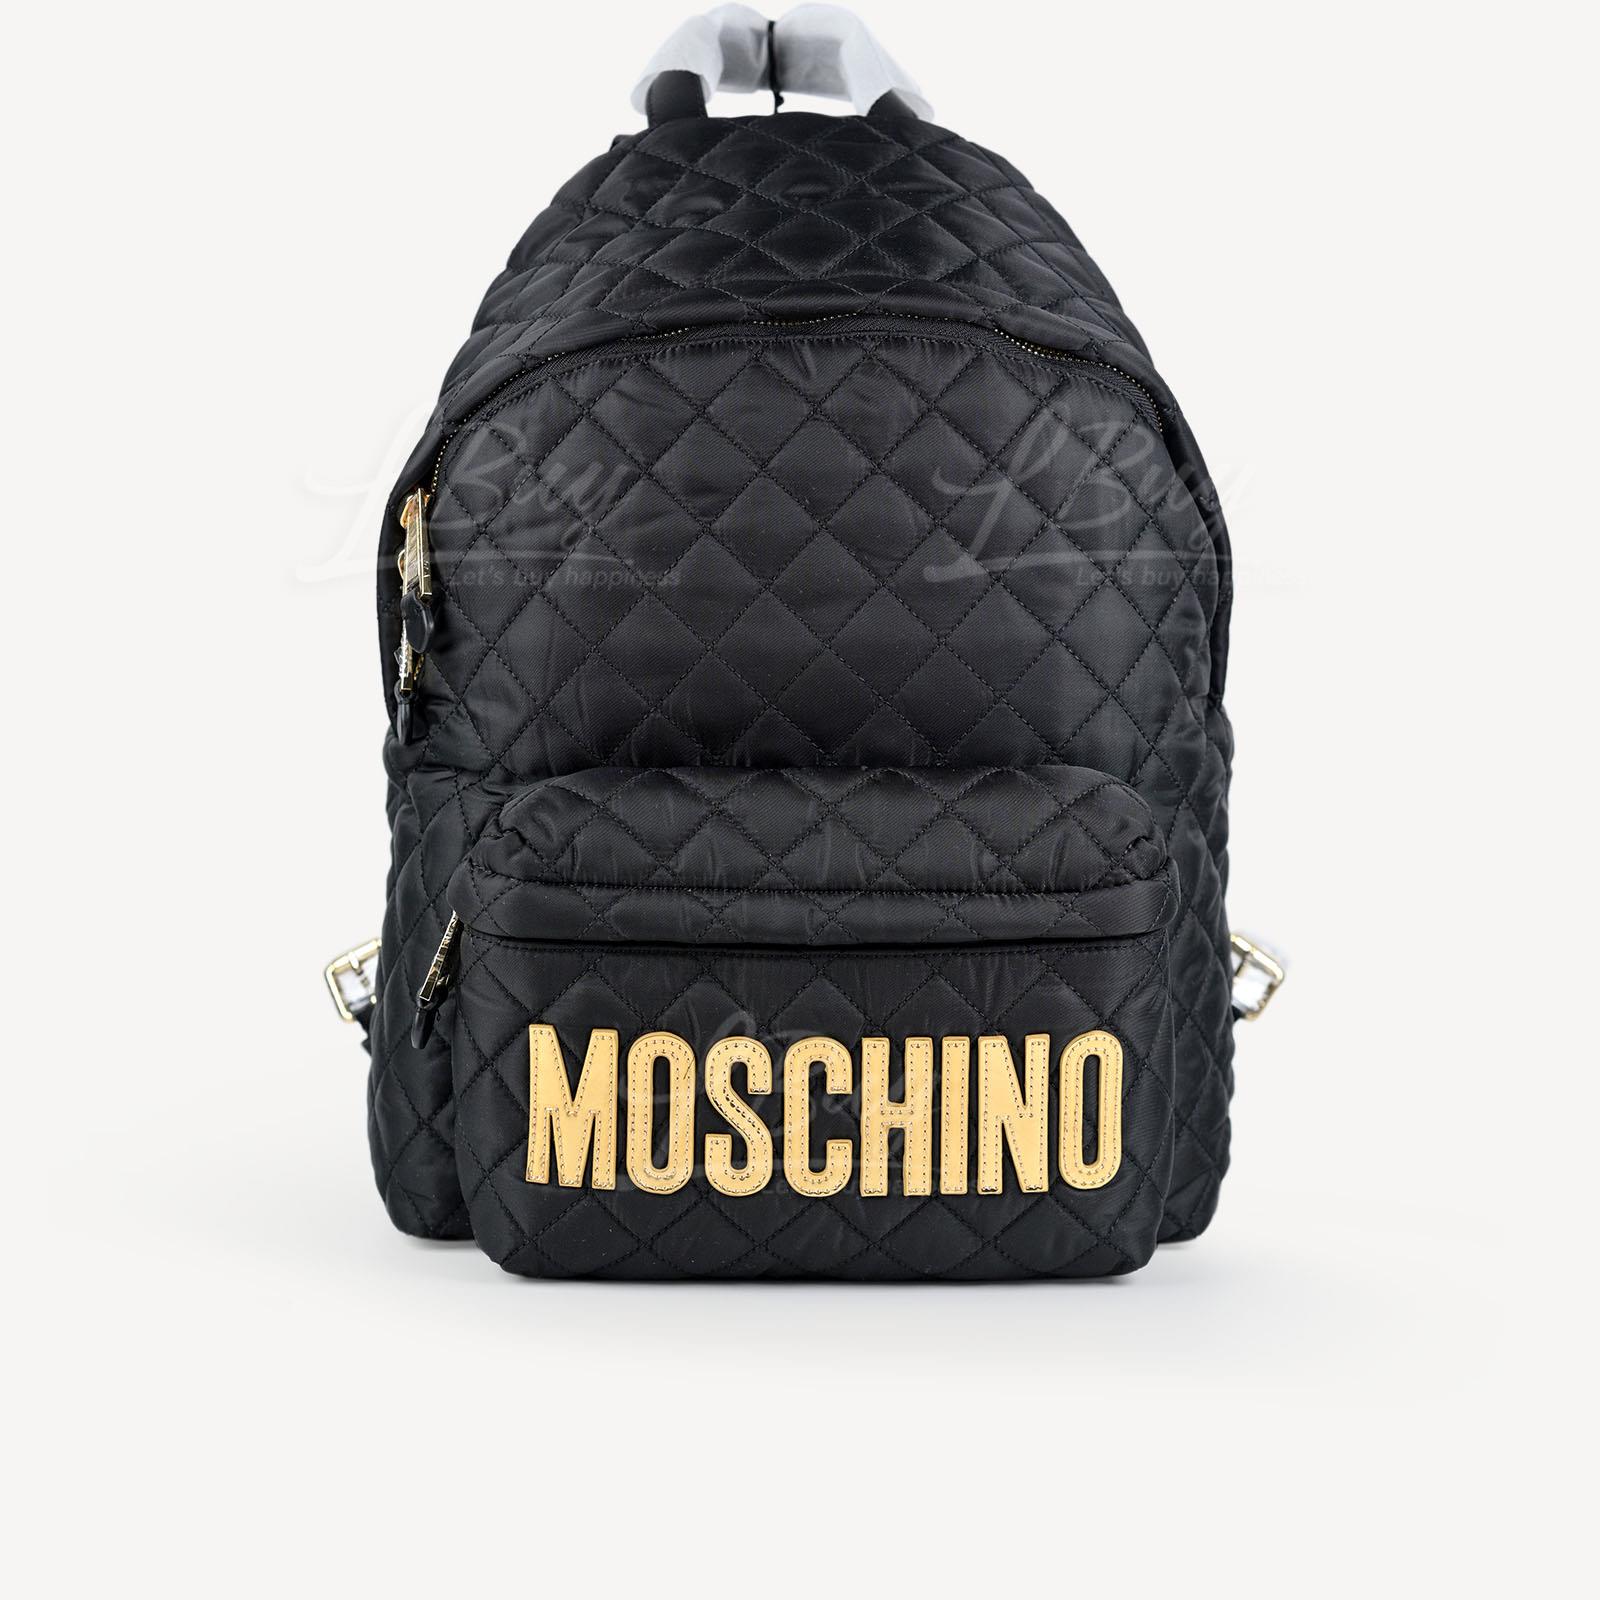 Moschino 金色logo 黑色 大号背囊